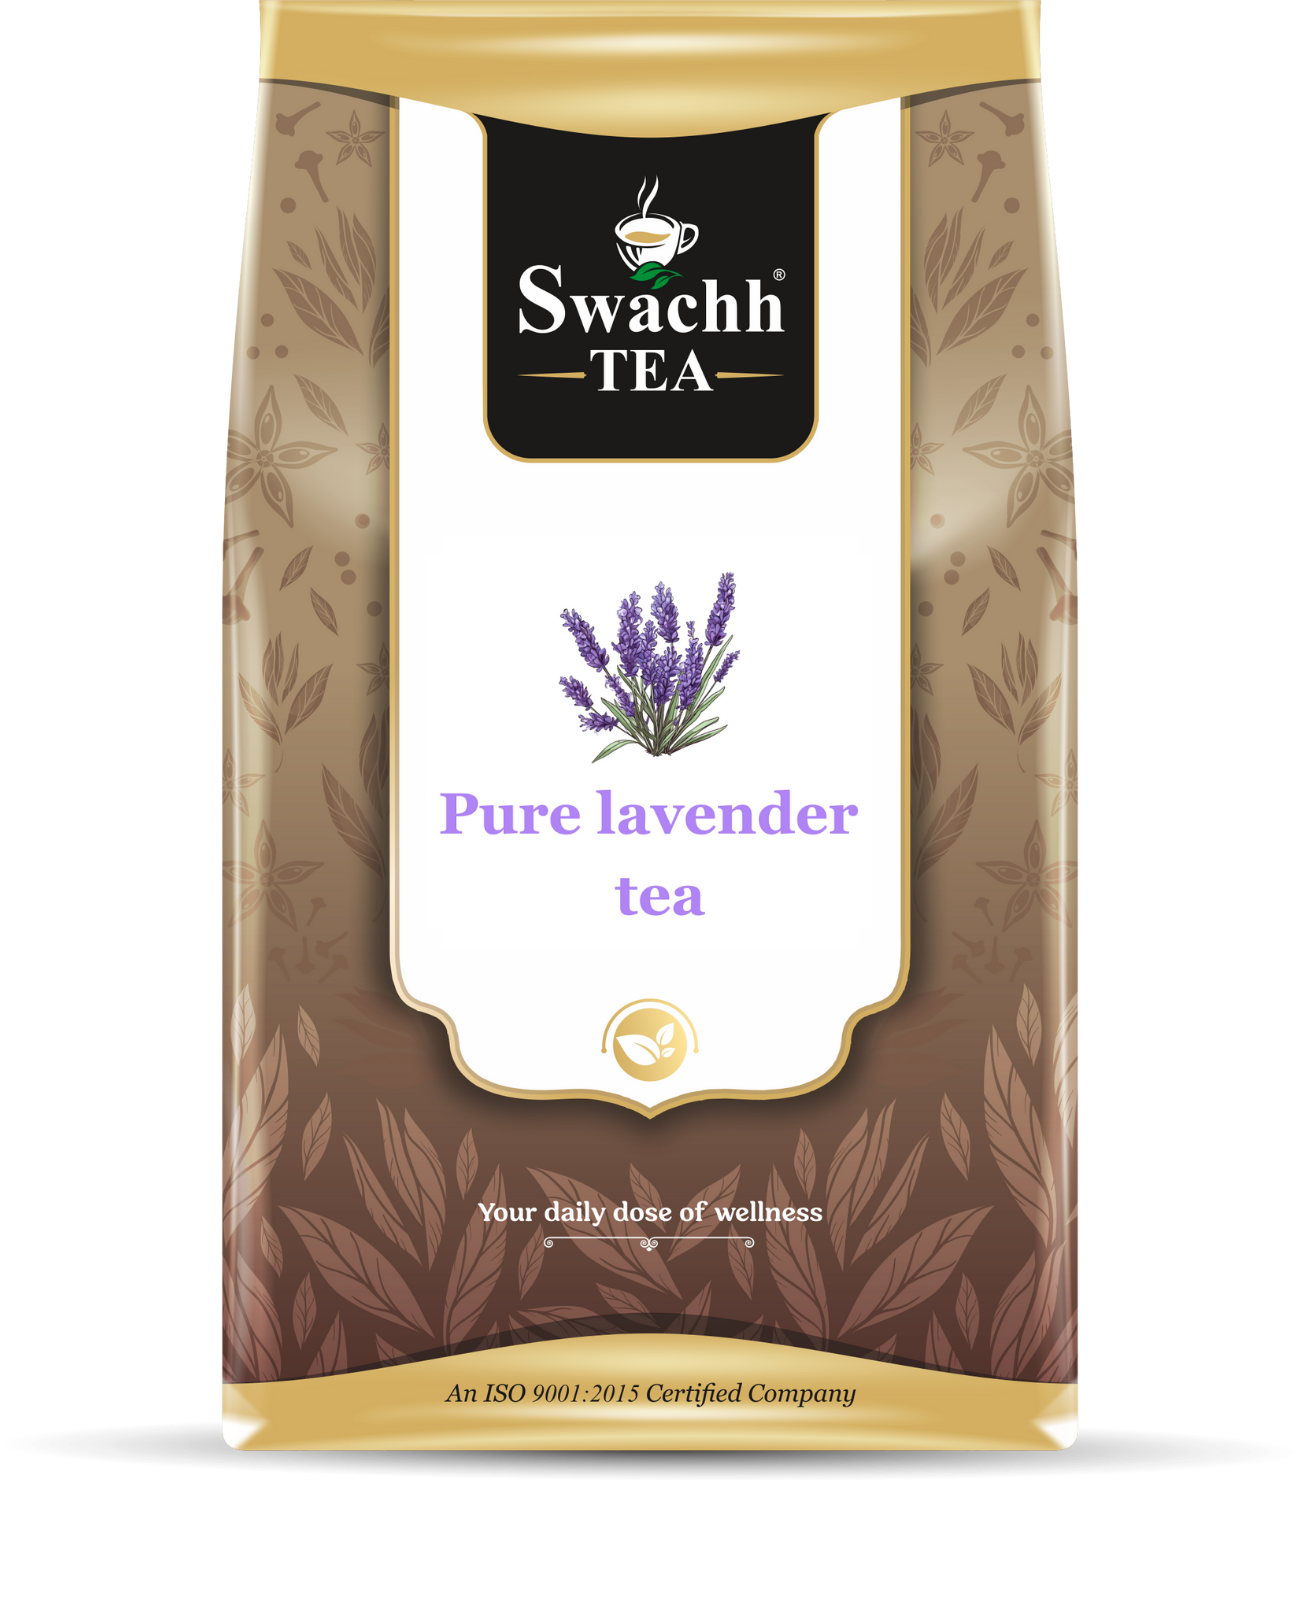 Pure lavender tea